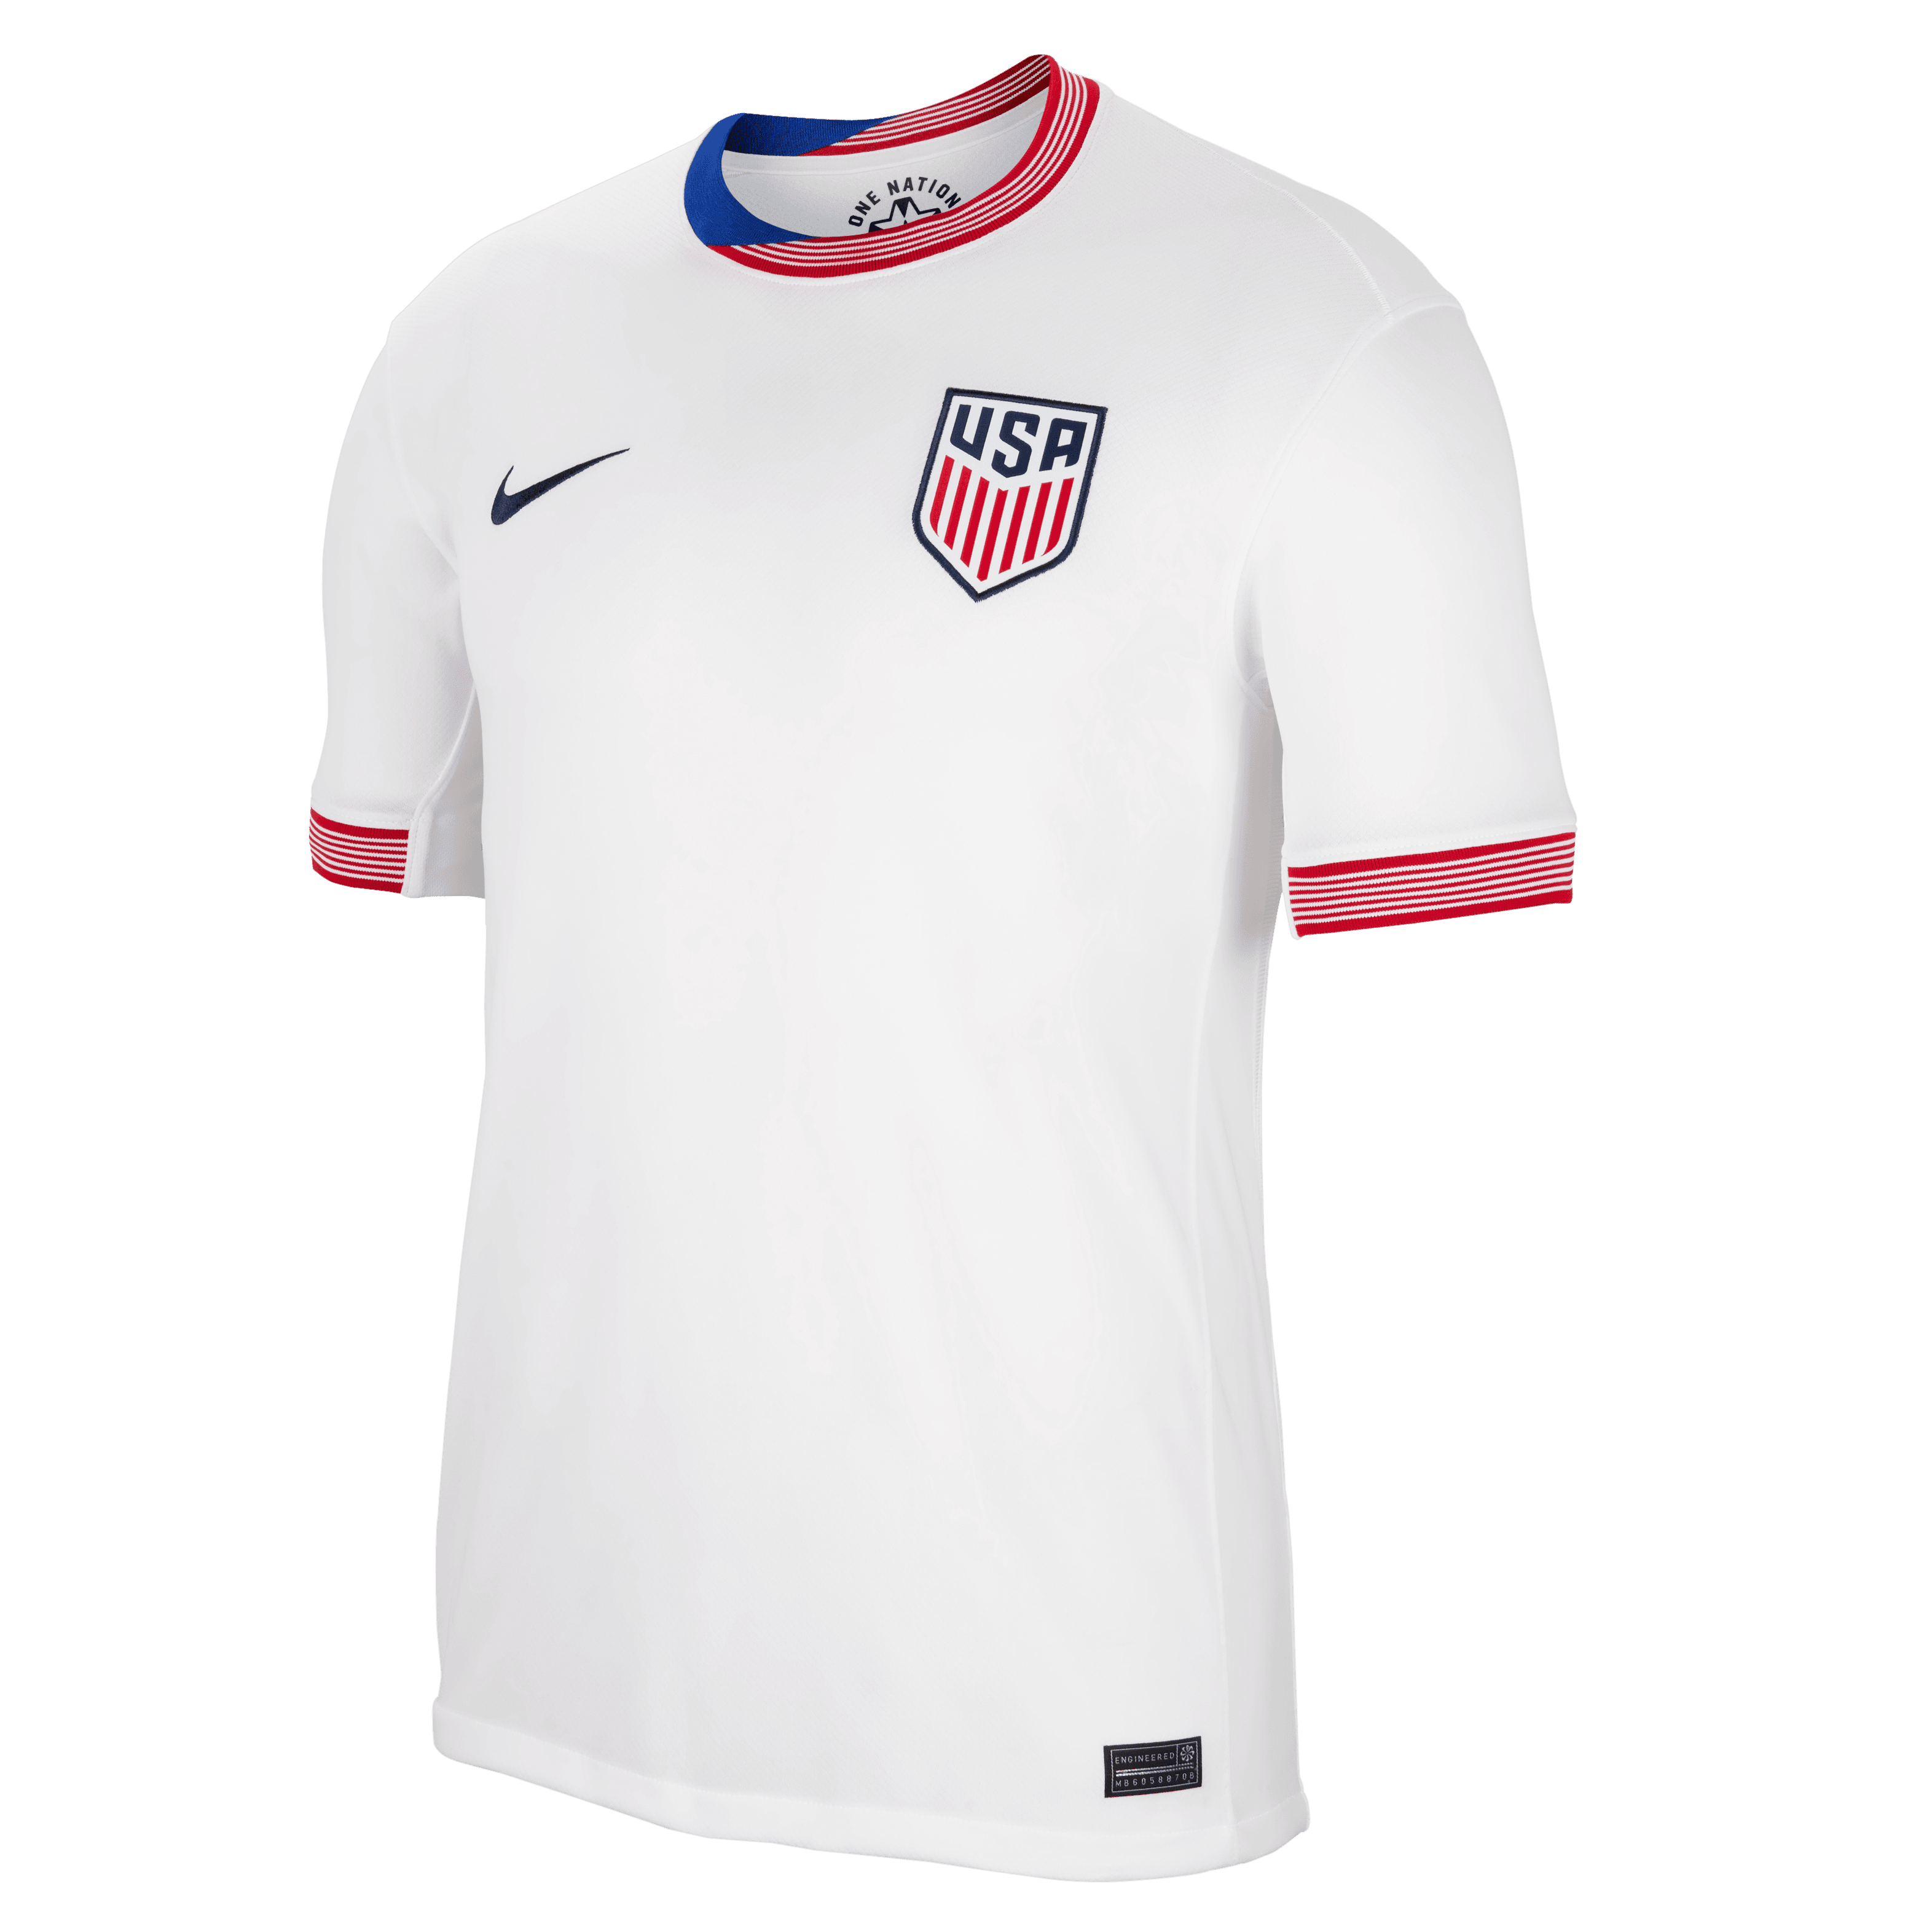 Nike USA Stadium Home Men's Nike Dri-FIT Soccer Replica Jersey